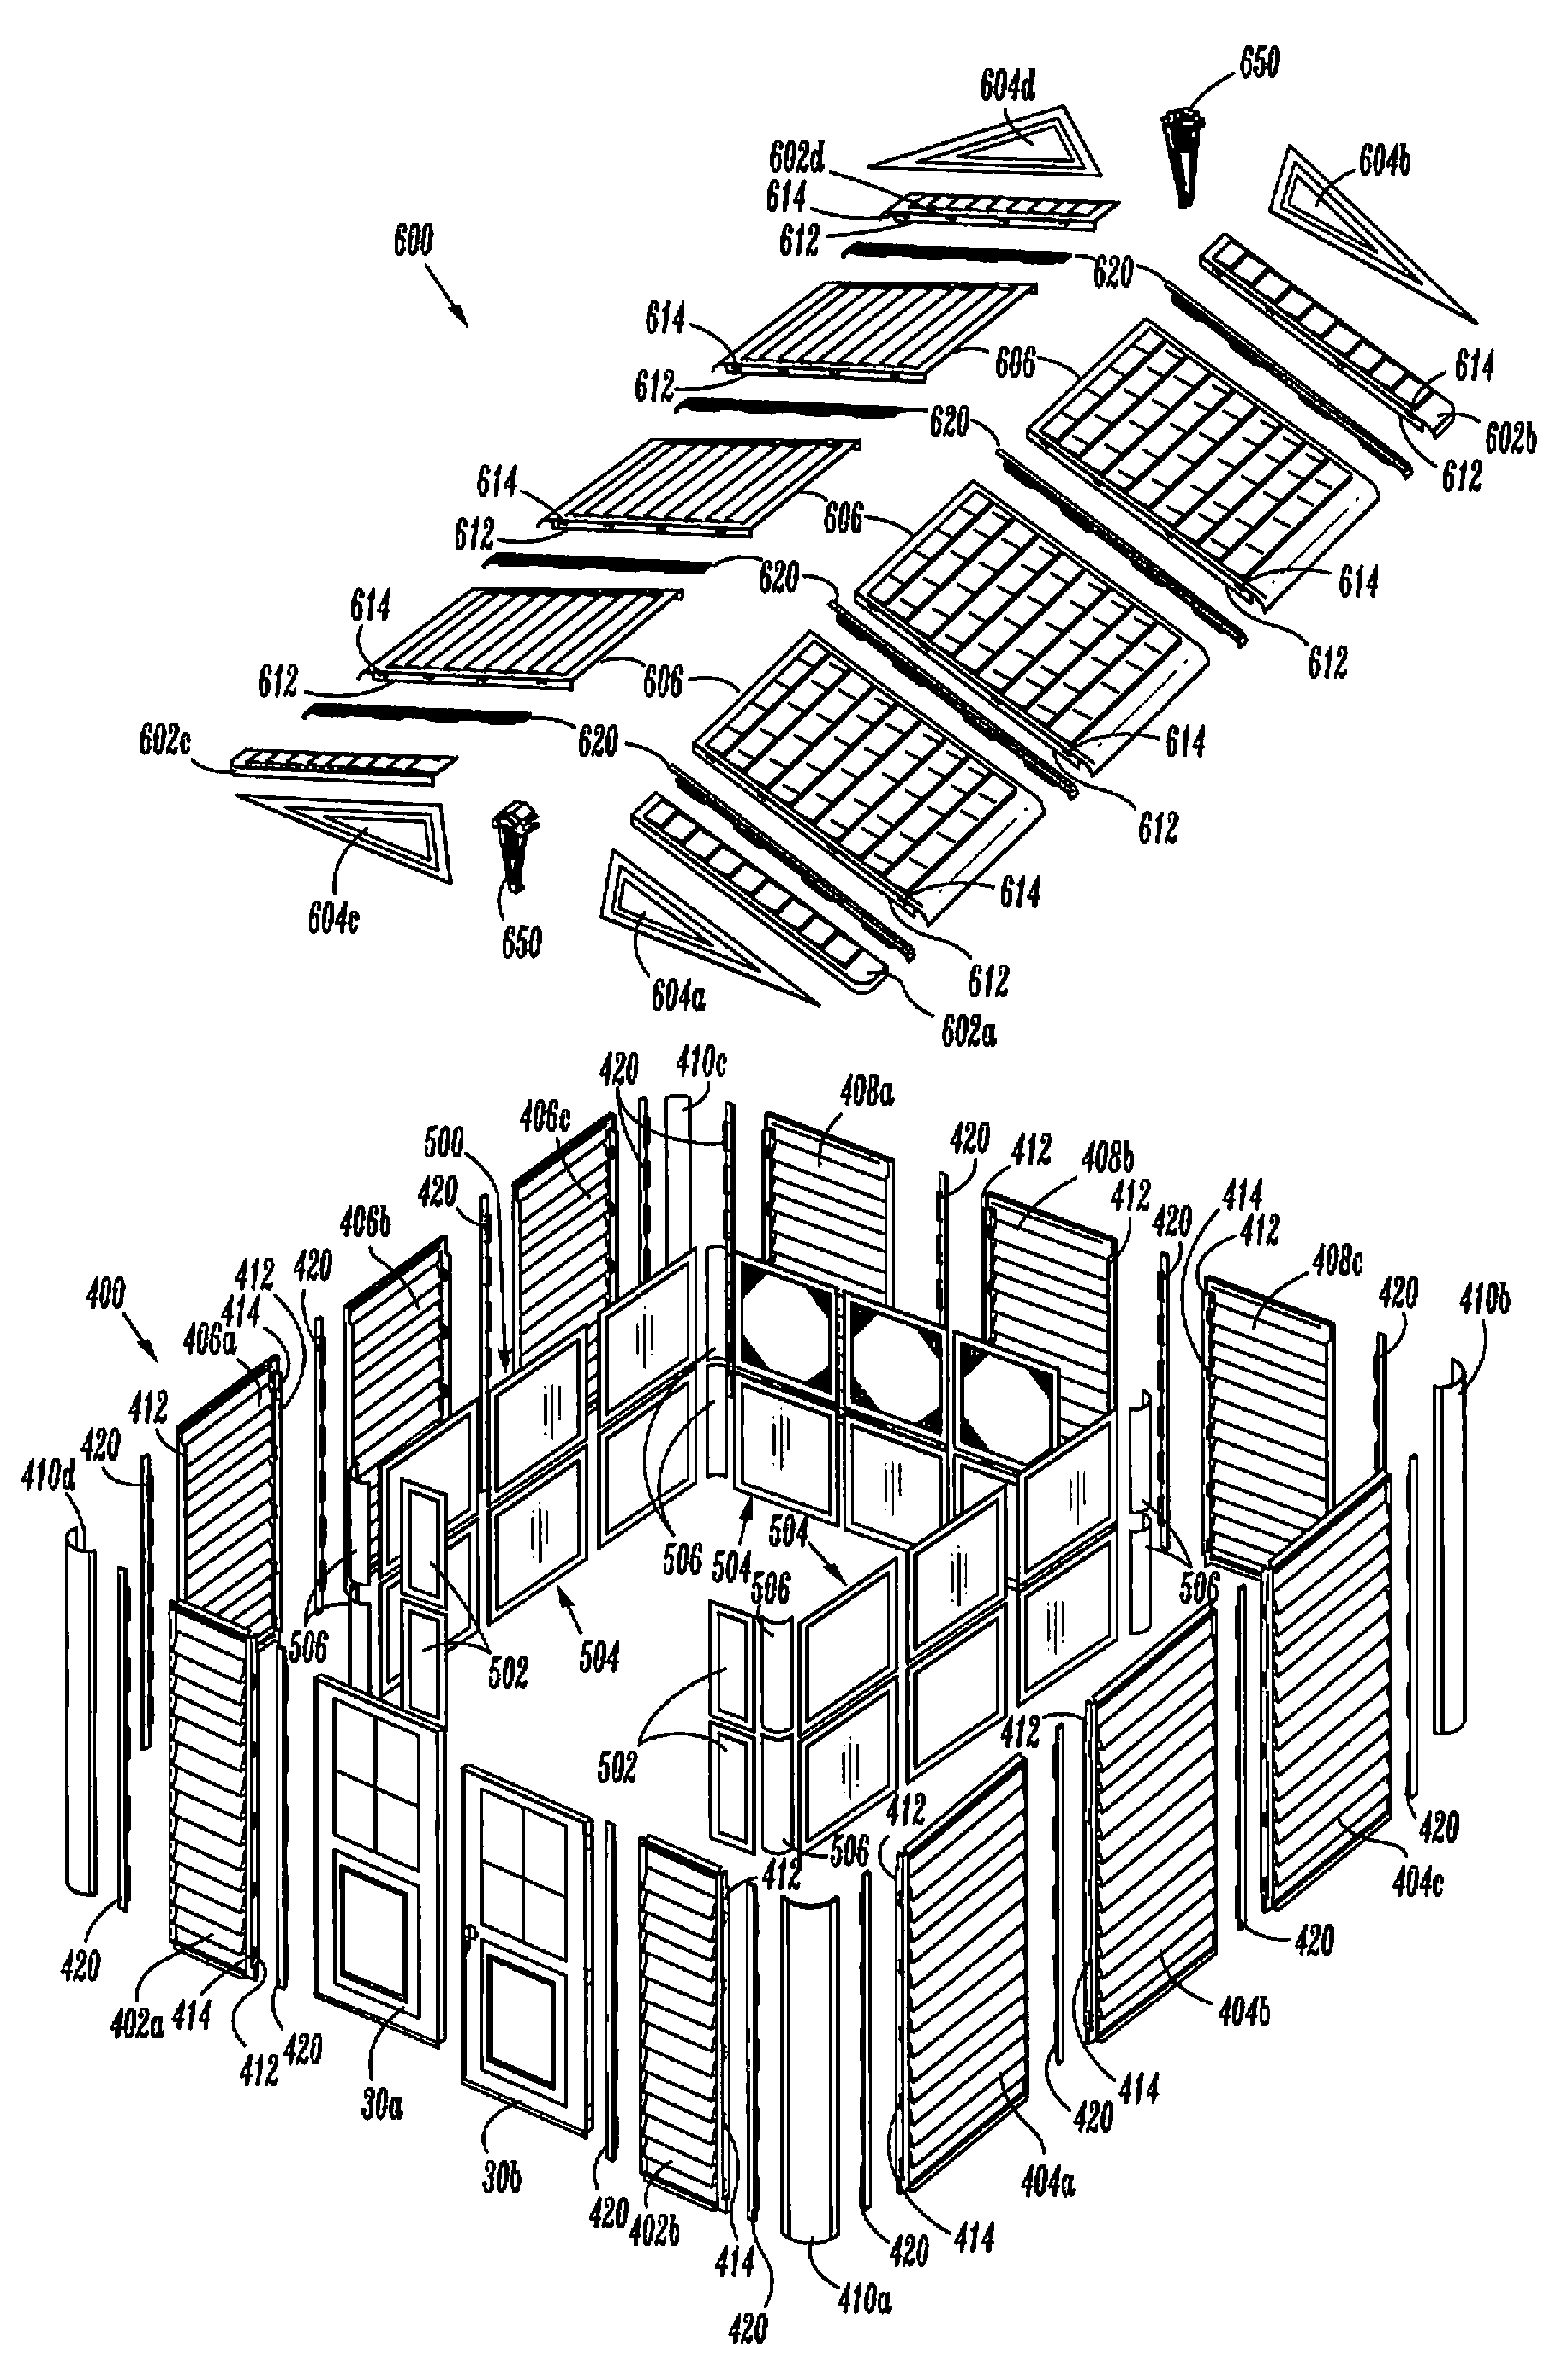 Modular storage shed system